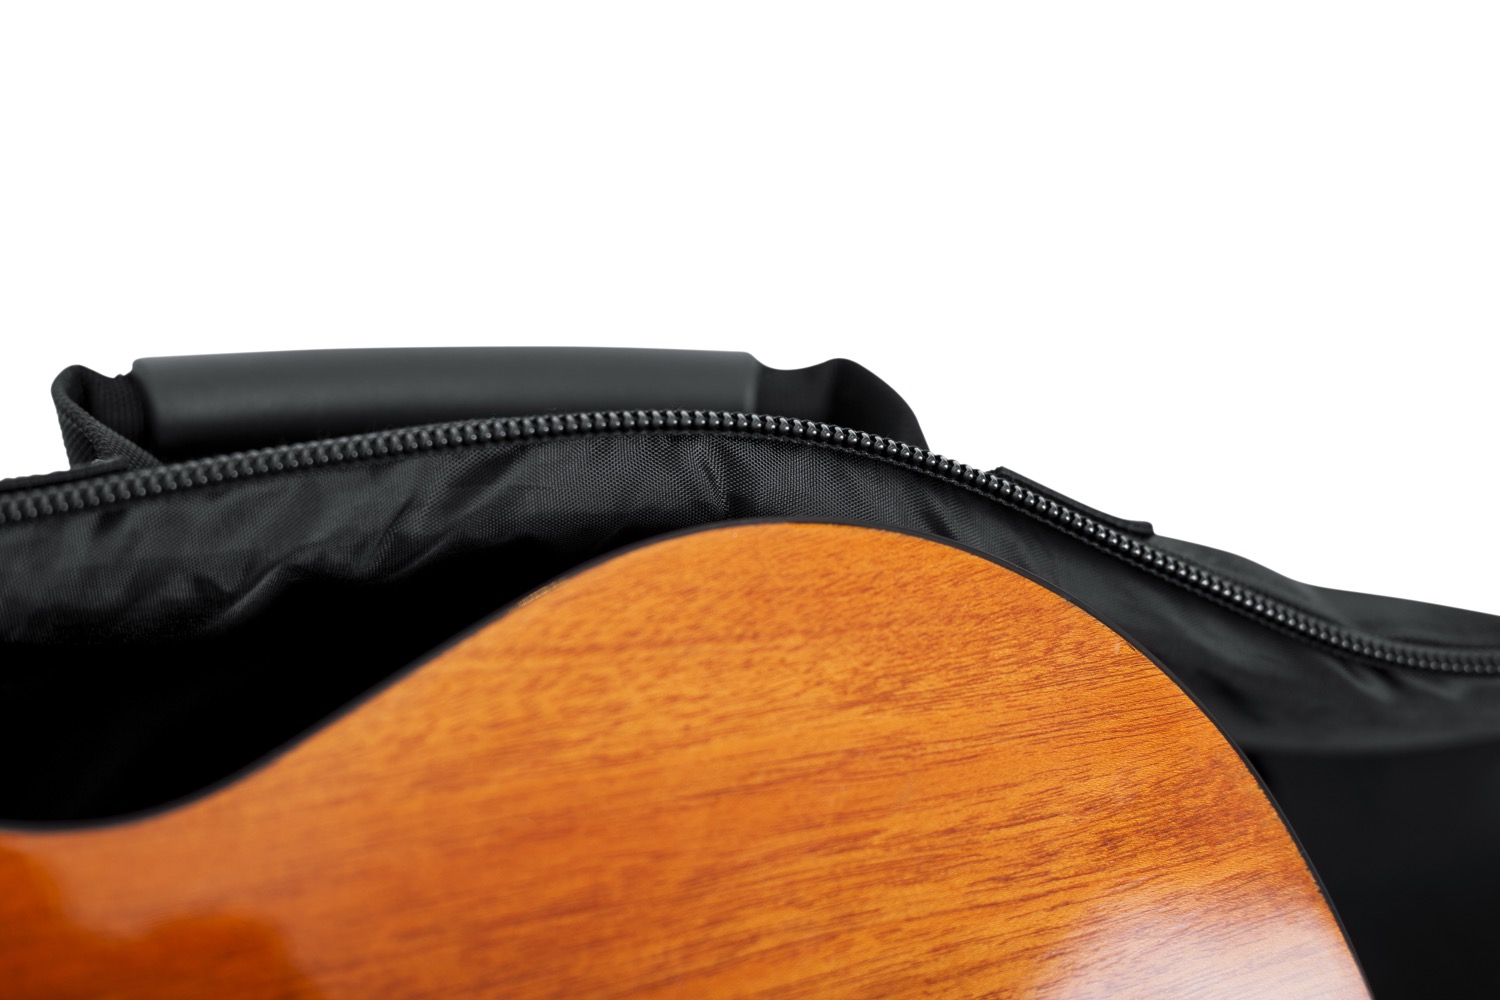 4G Series Gig Bag for Mini Acoustic Guitars